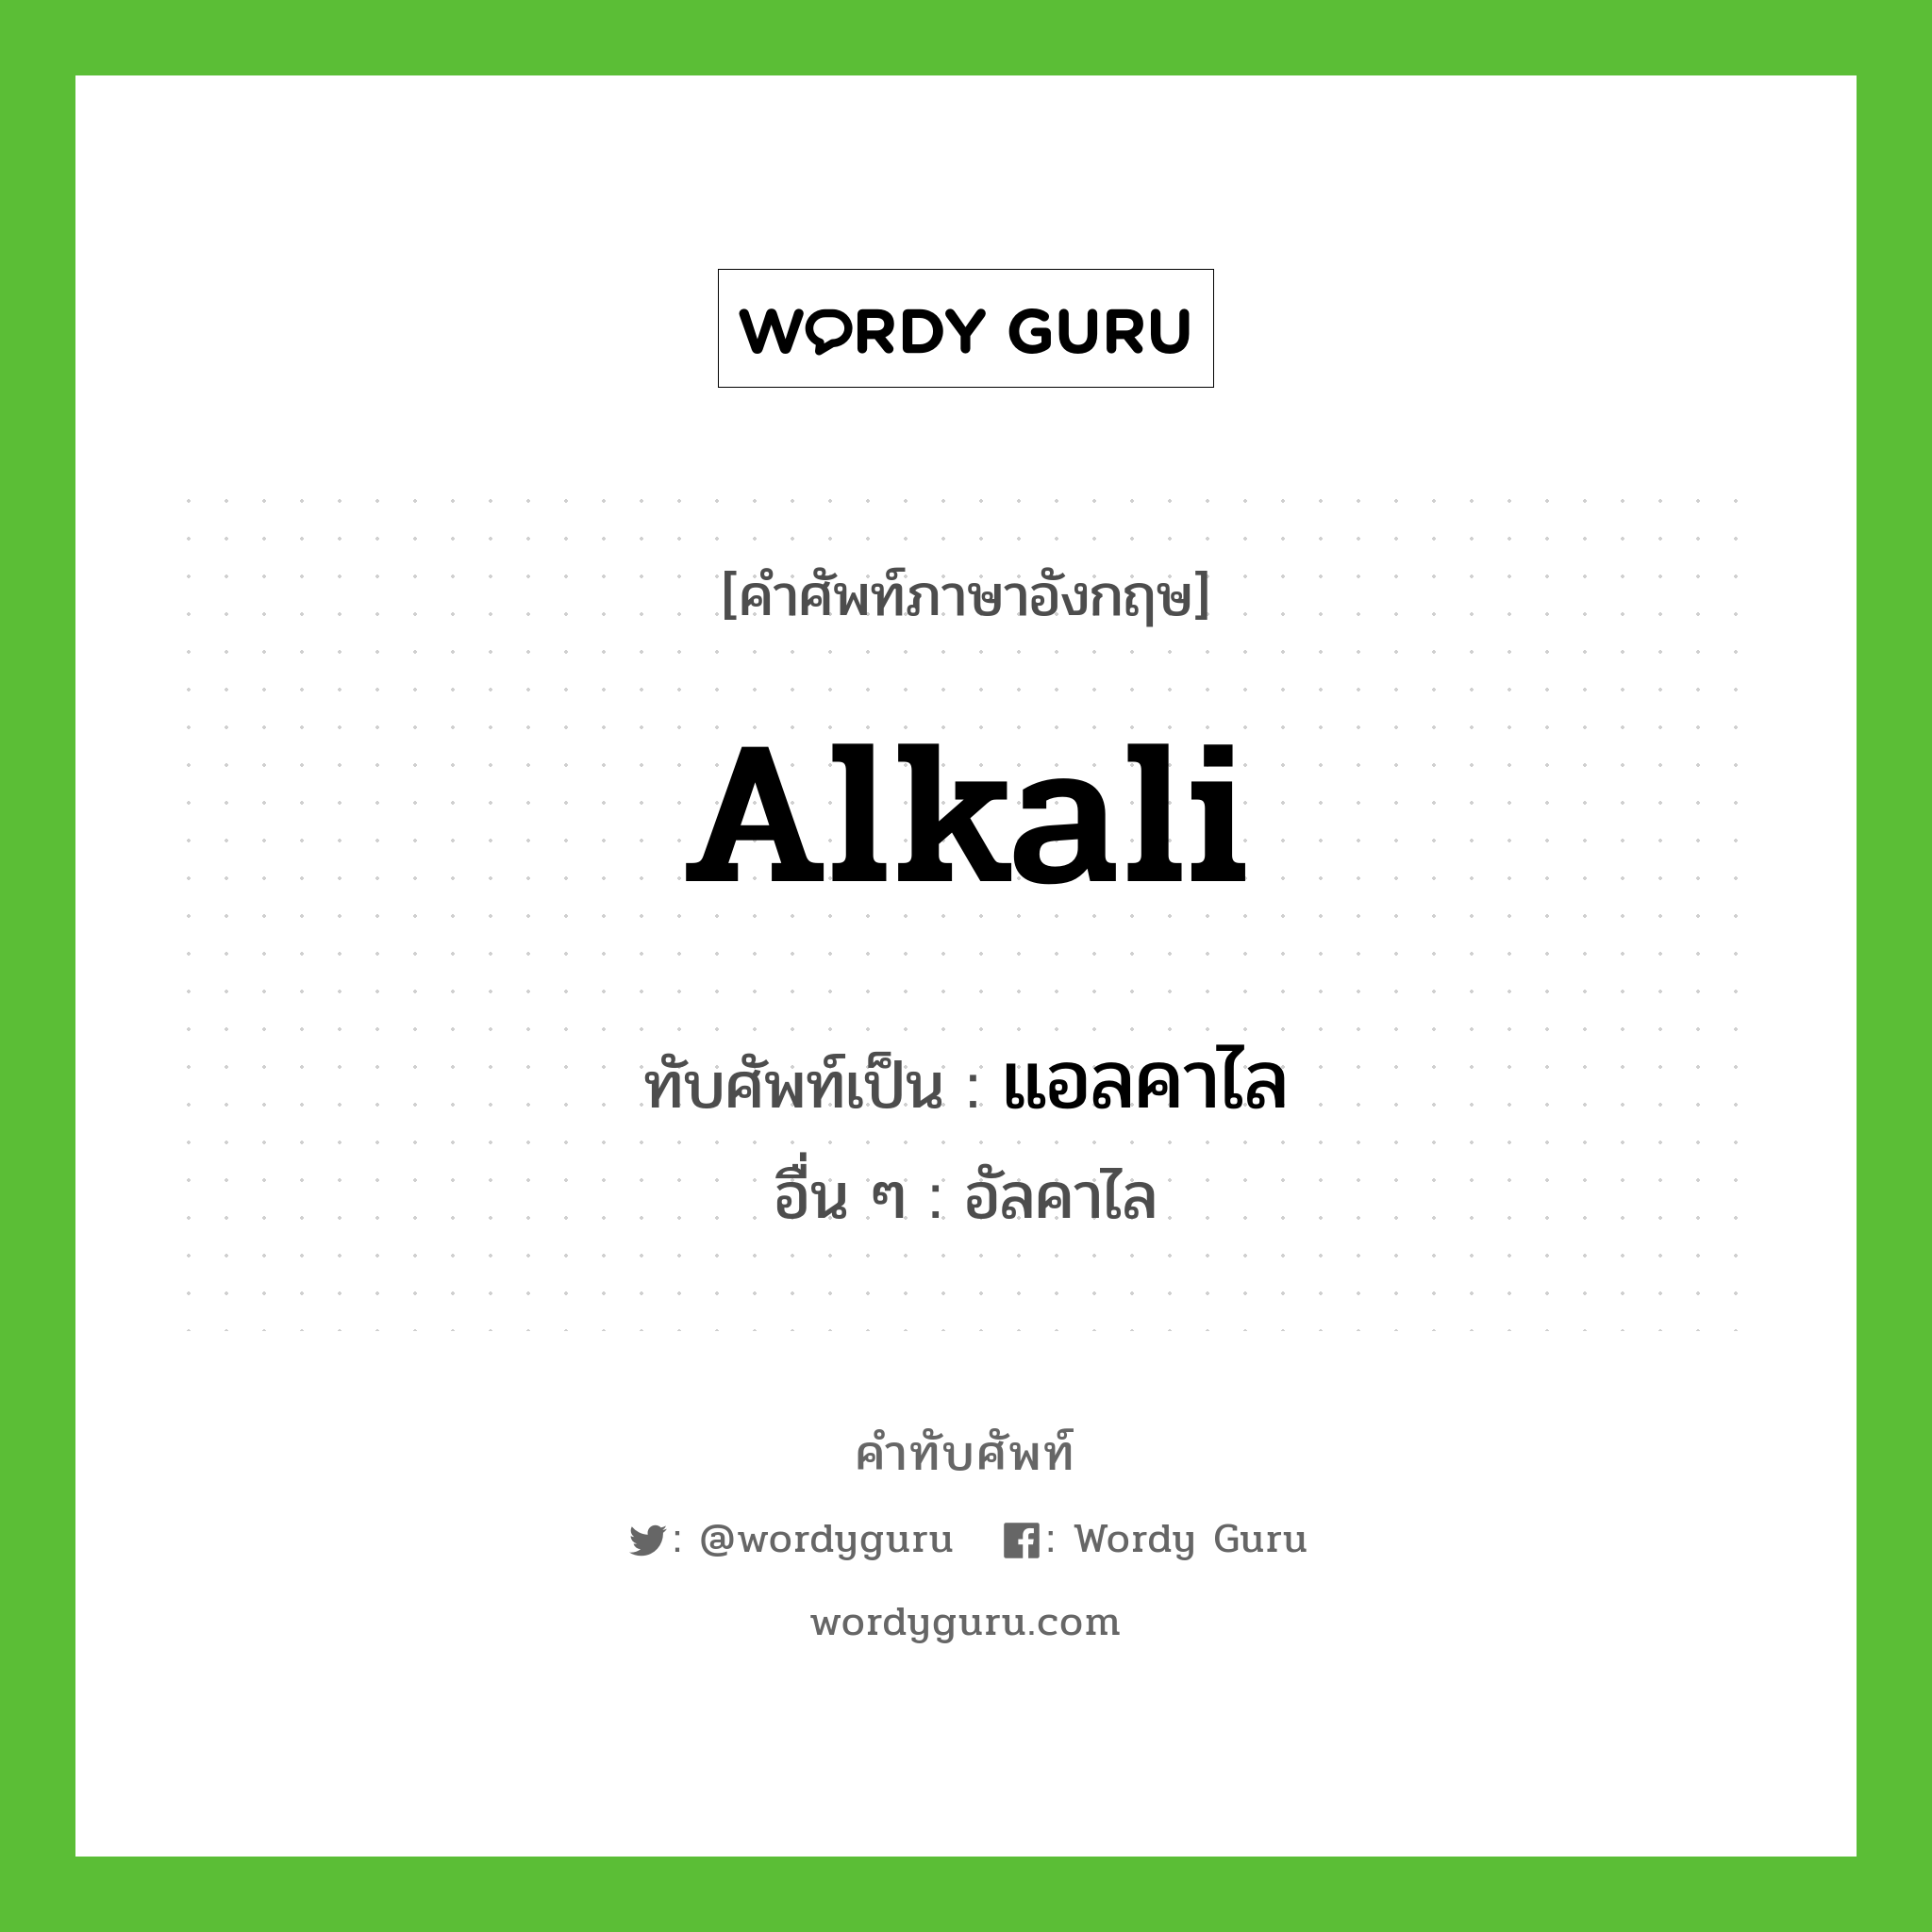 alkali เขียนเป็นคำไทยว่าอะไร?, คำศัพท์ภาษาอังกฤษ alkali ทับศัพท์เป็น แอลคาไล อื่น ๆ อัลคาไล